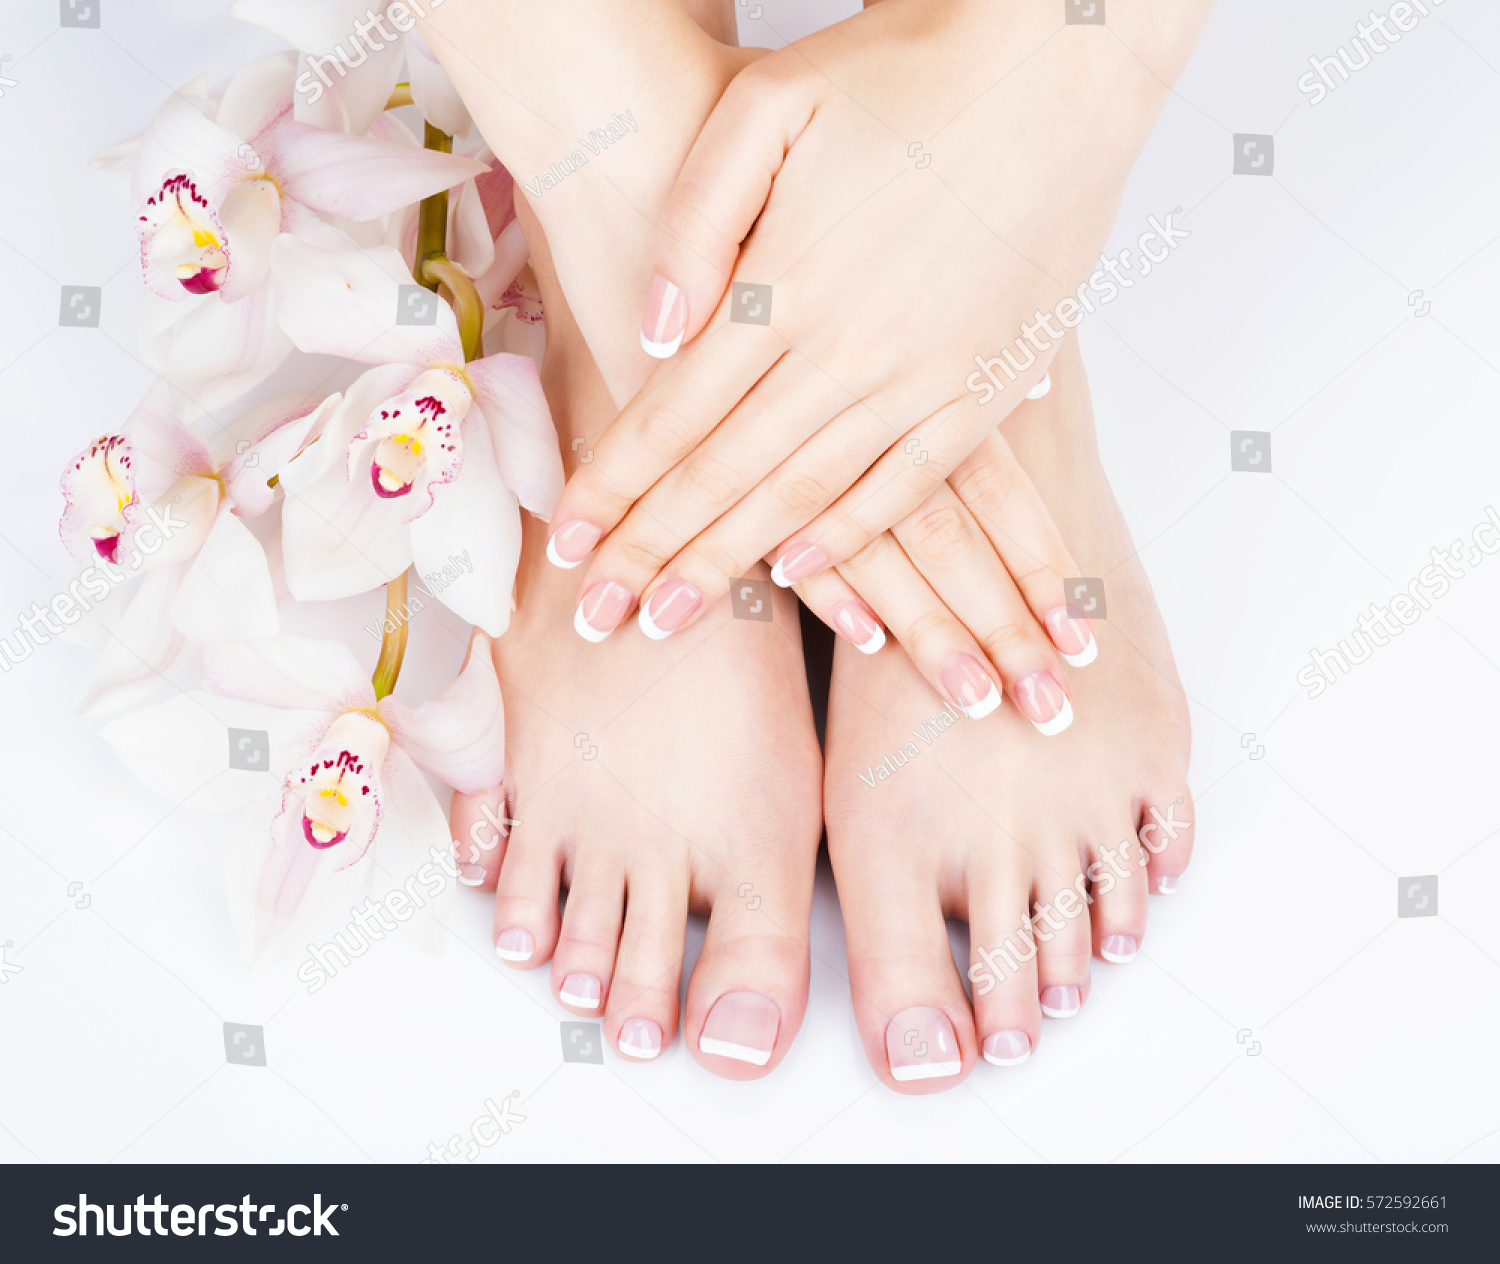 Closeup photo of a female feet at spa salon on pedicure and manicure procedure - Soft focus image #572592661